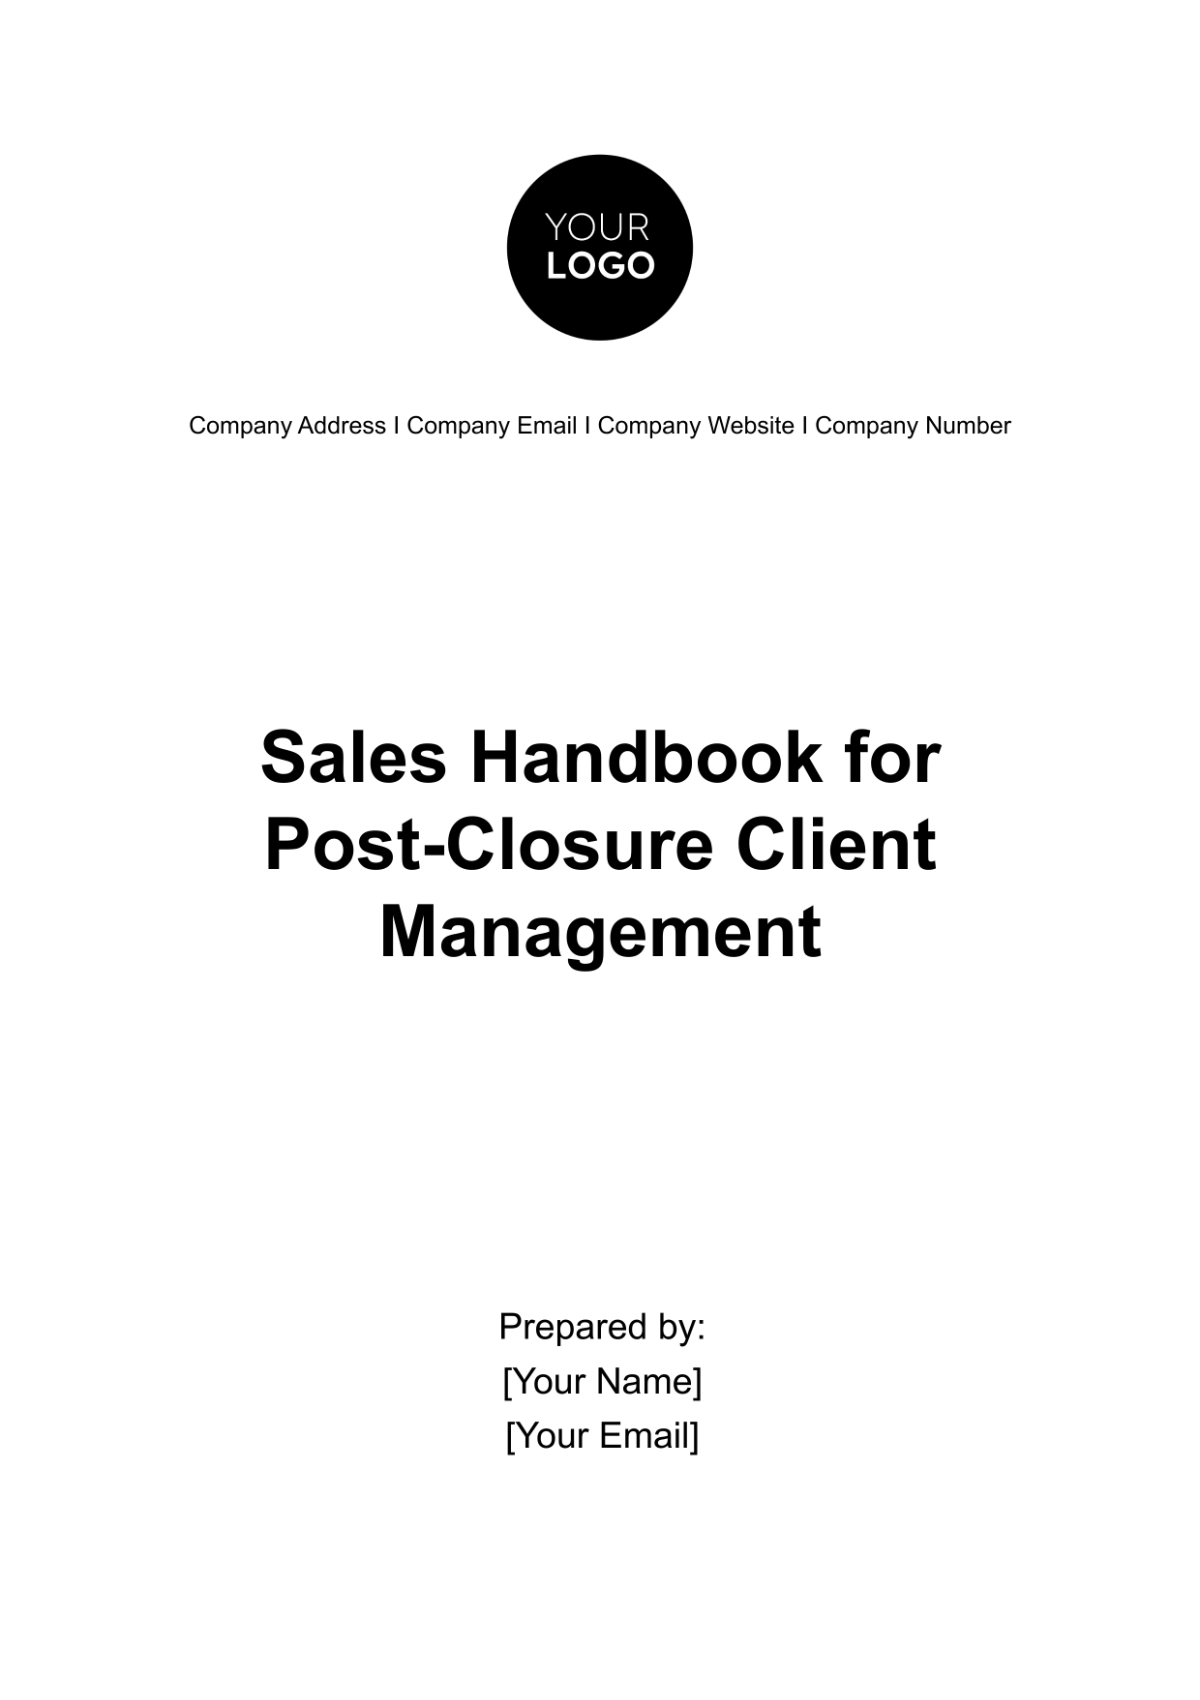 Sales Handbook for Post-Closure Client Management Template